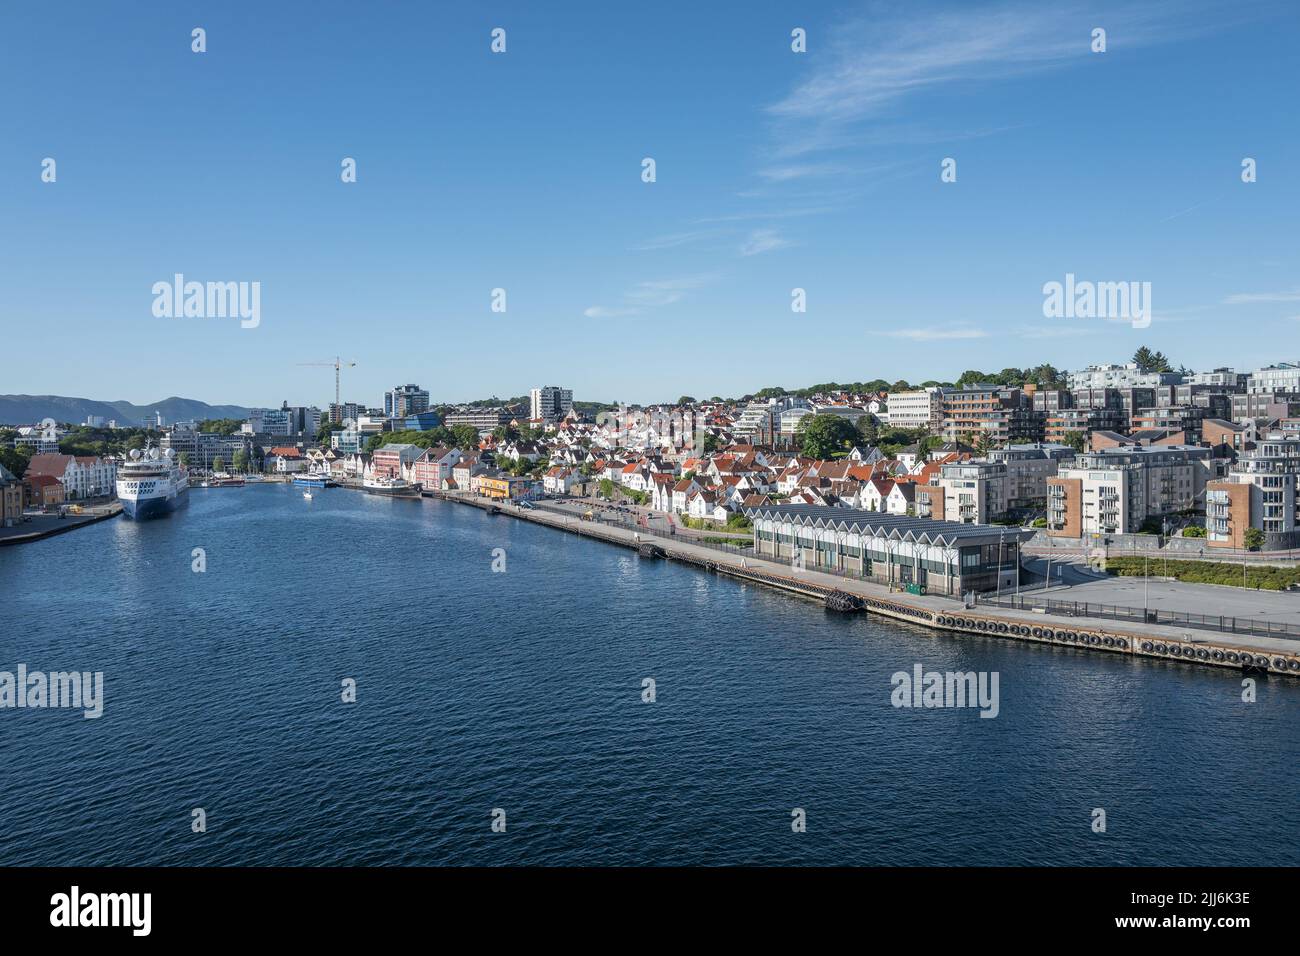 La zona del puerto de Stavanger se llama Vågen, Noruega. Foto de stock